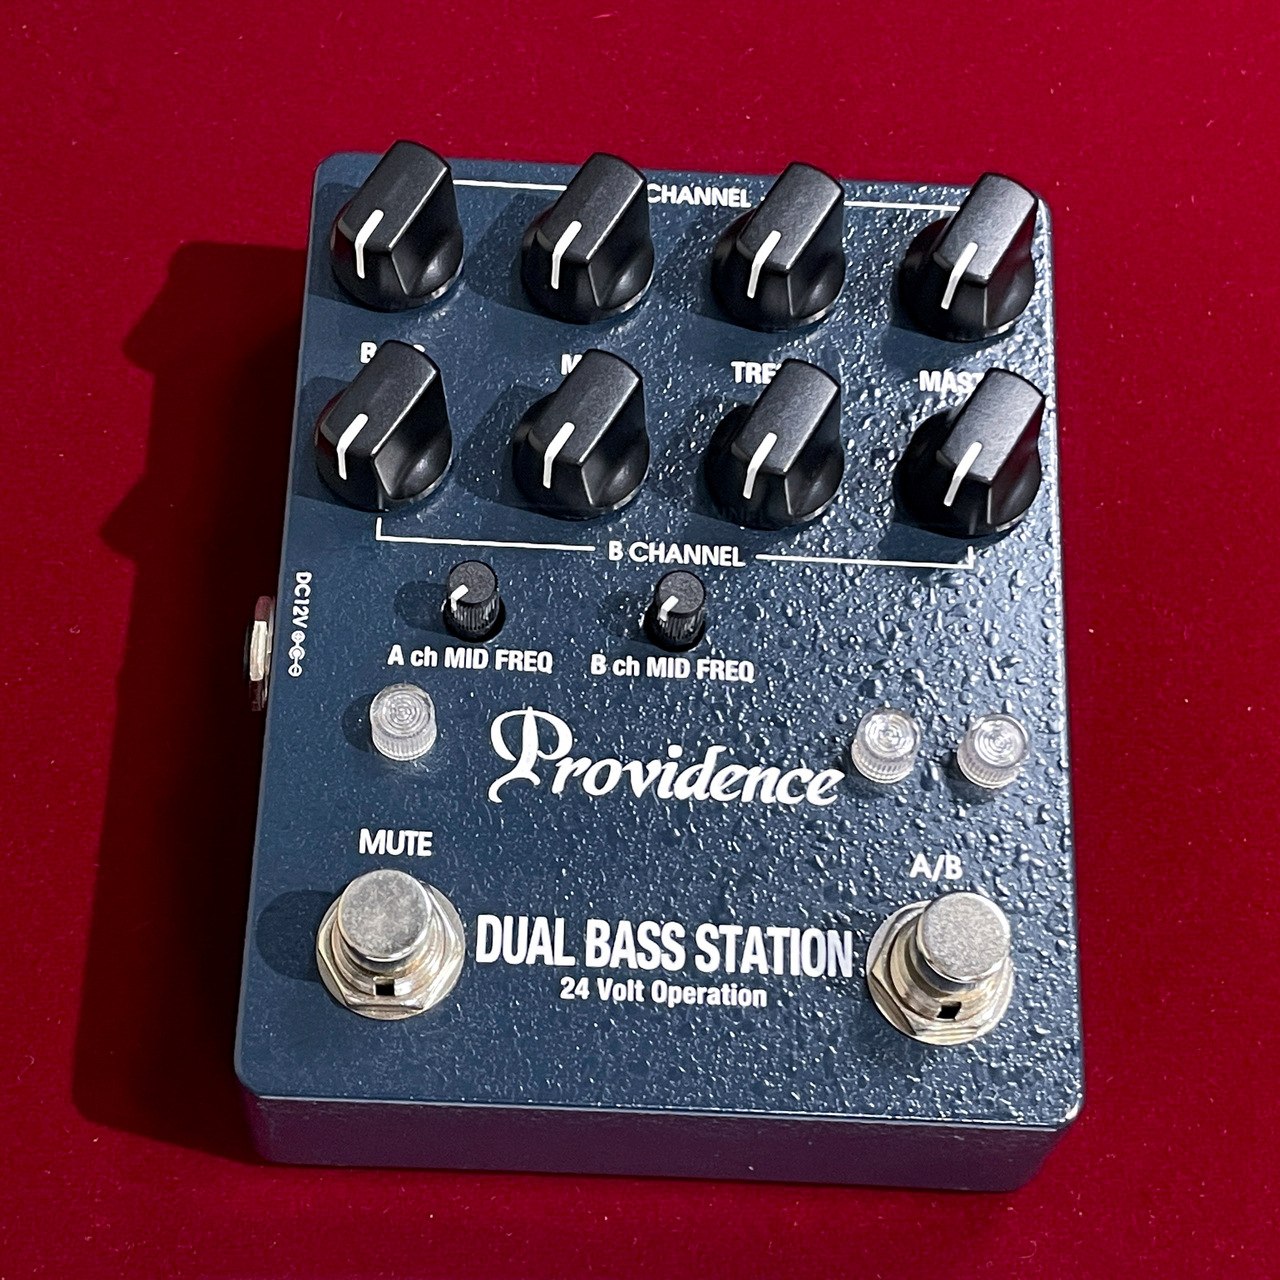 providence dual bass station